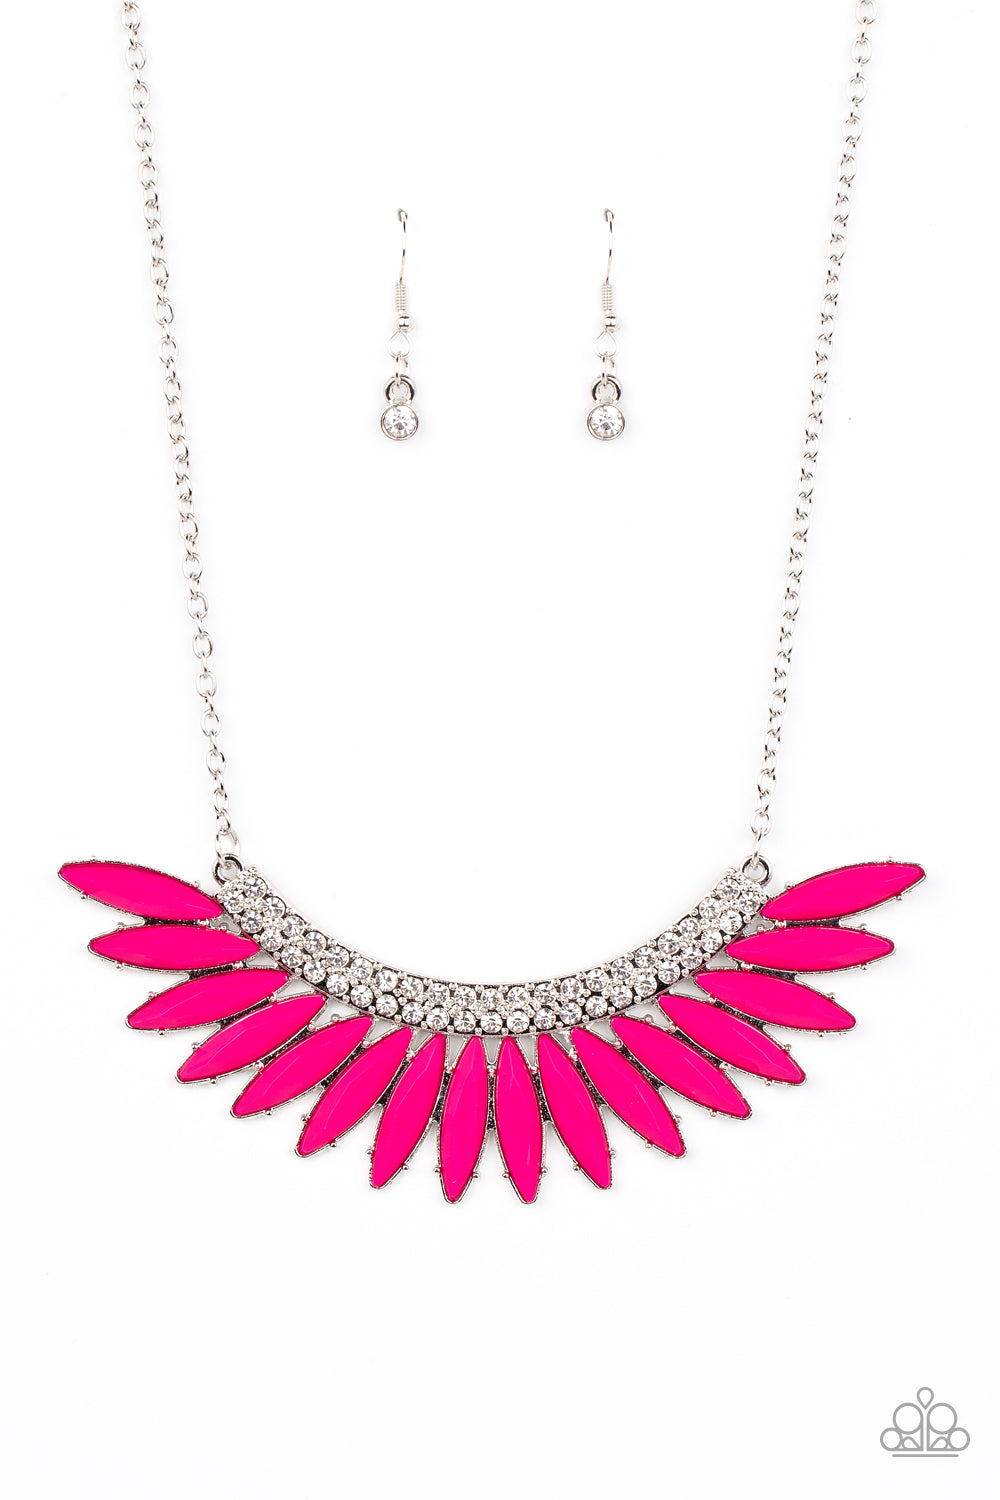 Flauntable Flamboyance - Pink Marquise-Cut Beads/White Rhinestone Paparazzi Necklace & matching earrings